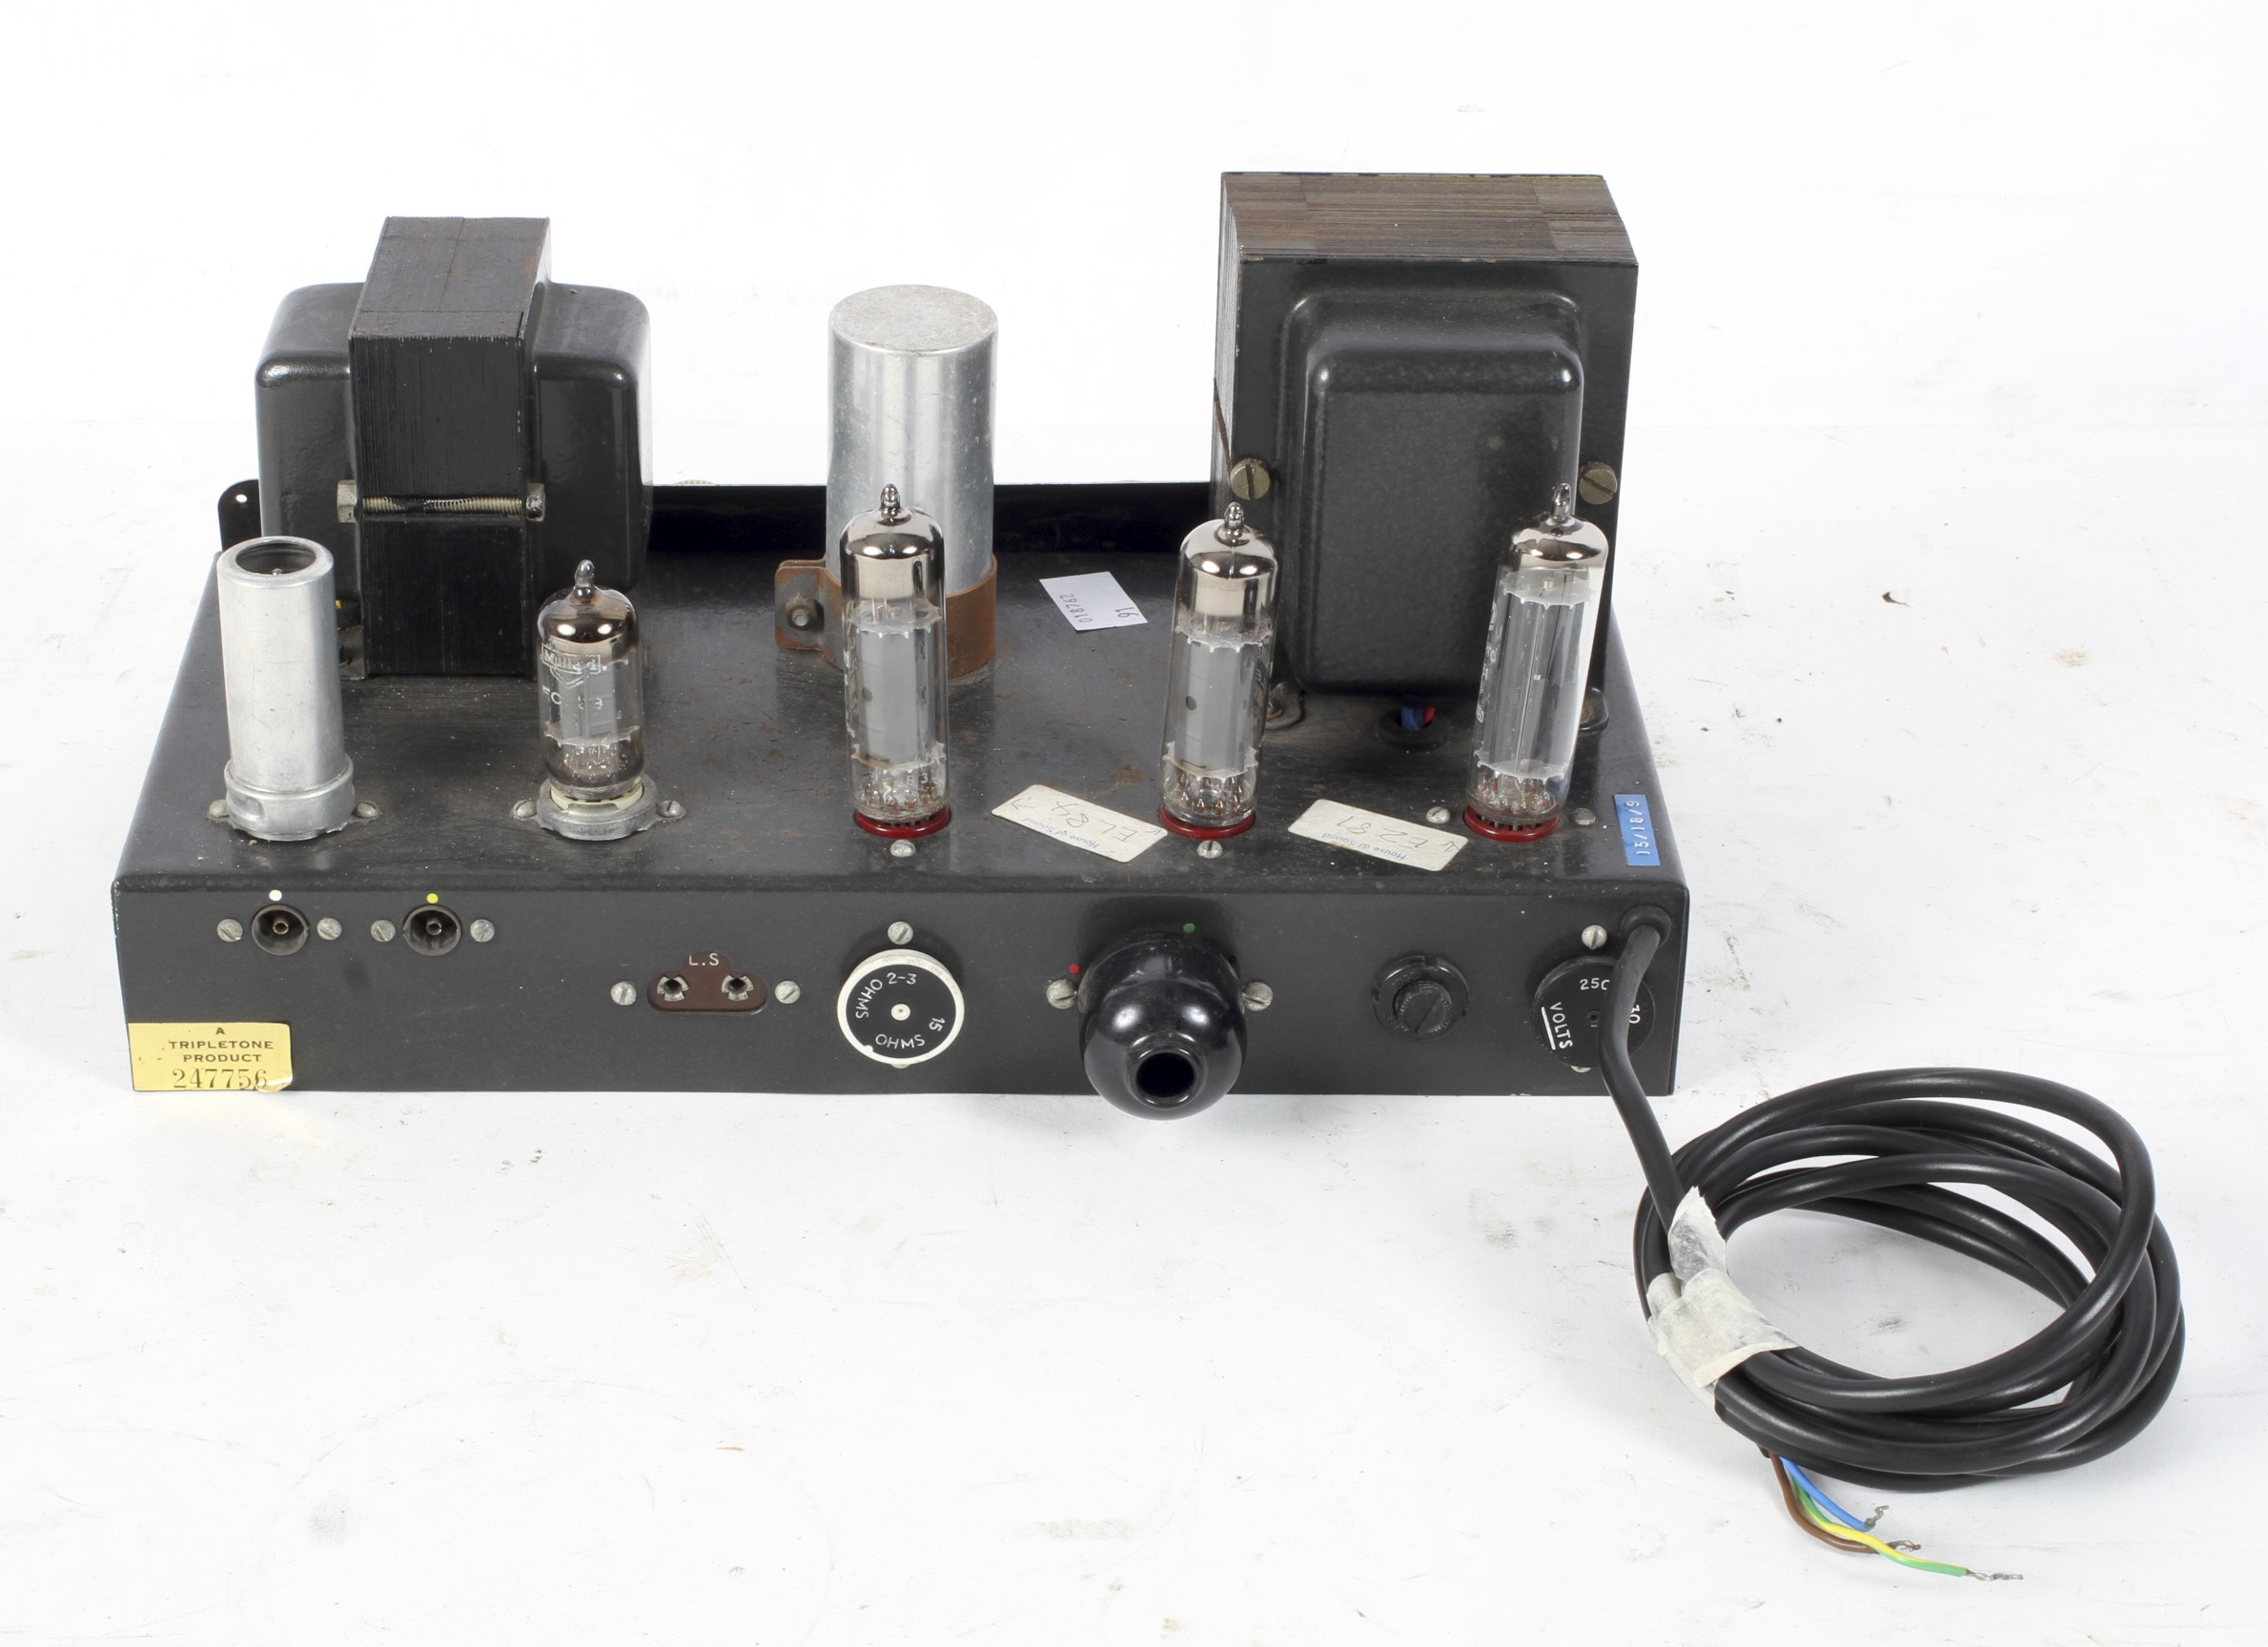 A vintage Tripletone stereo valve amplifier, - Image 2 of 2